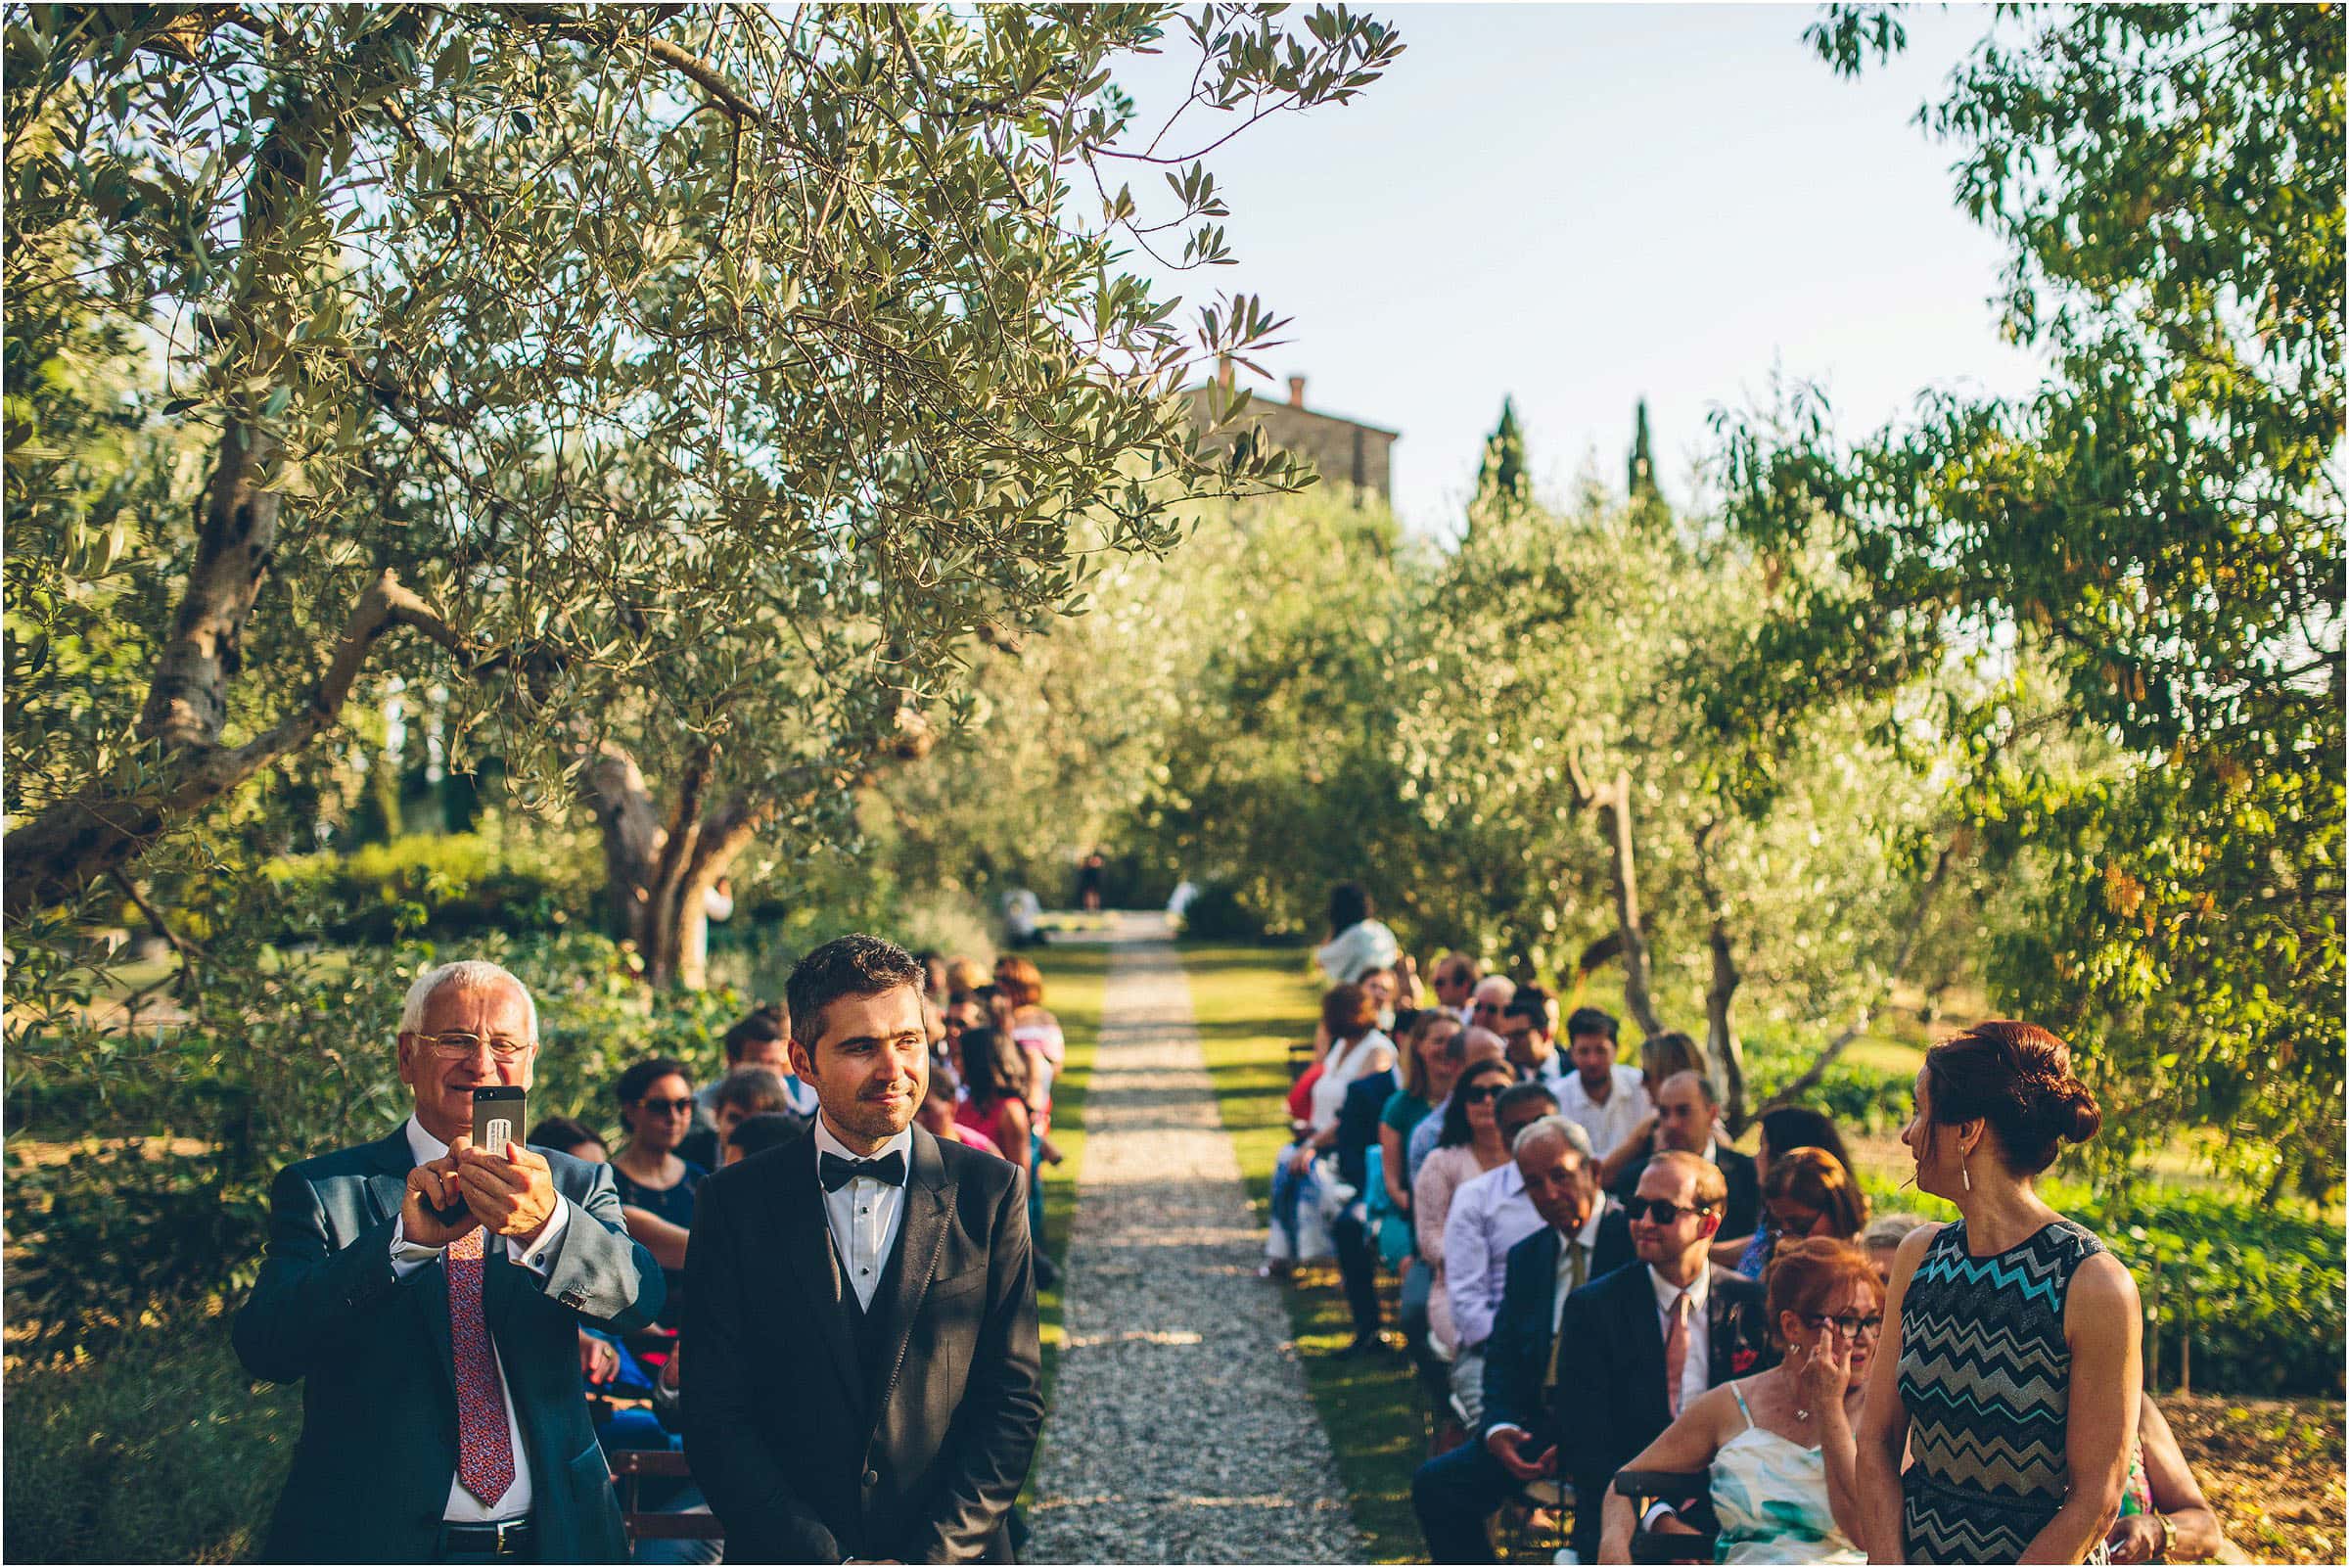 At Castello di Vicarello the groom waits for his bride to walk down the aisle